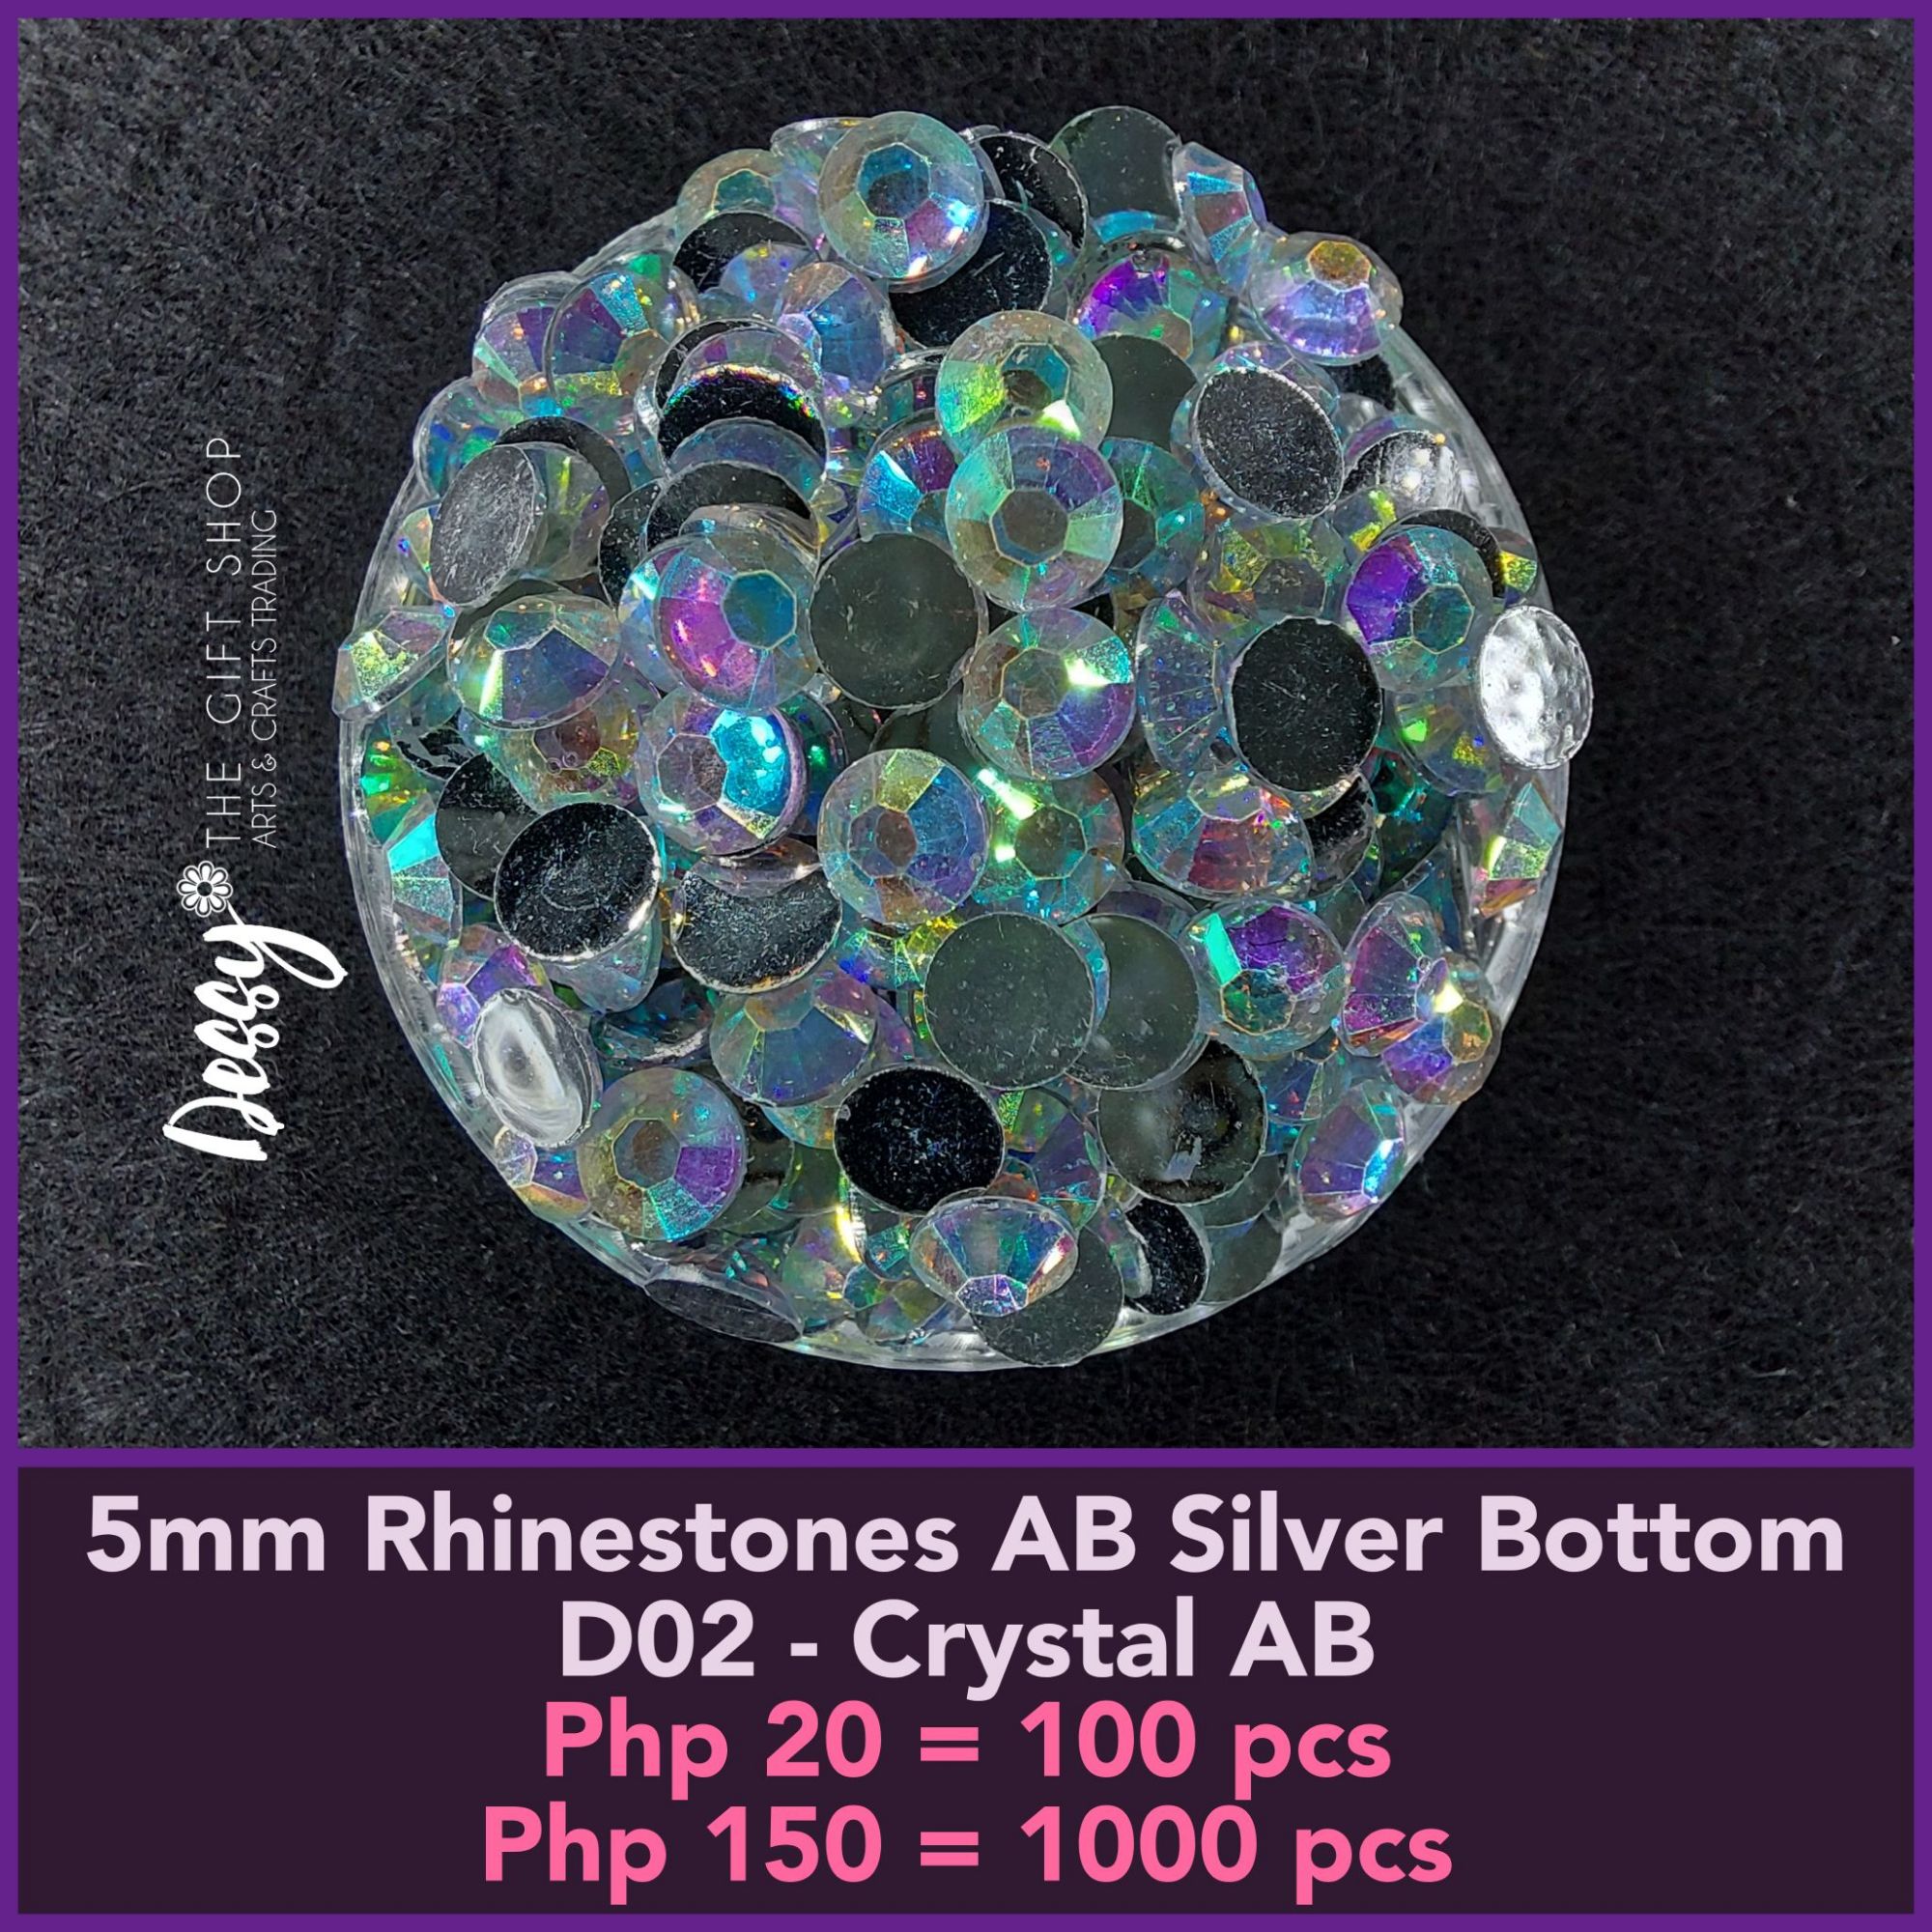 3mm Rhinestones AB Silver Bottom - Crystal AB - 100 pcs